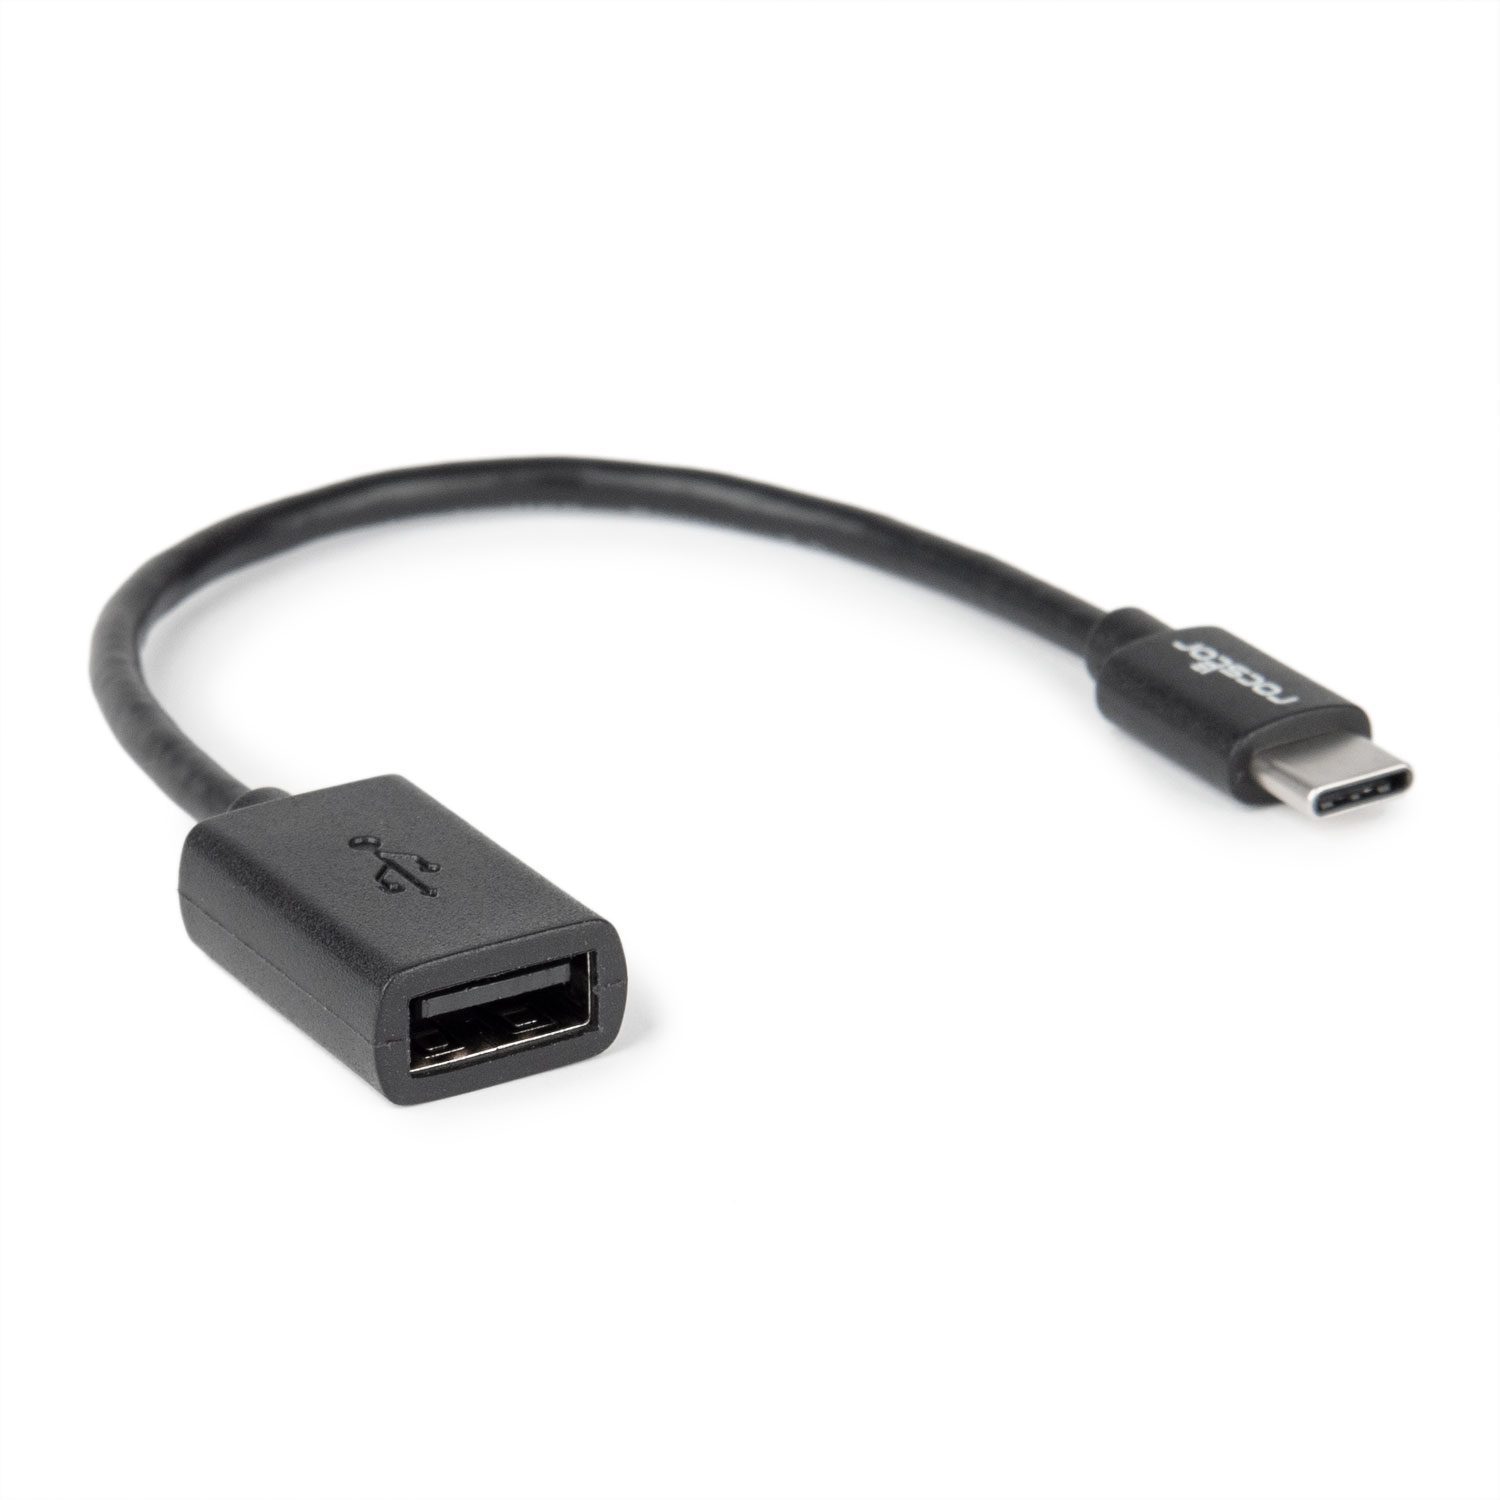 USB-C to USB Adapter Converter USB-A - USB-C Cables, Cables